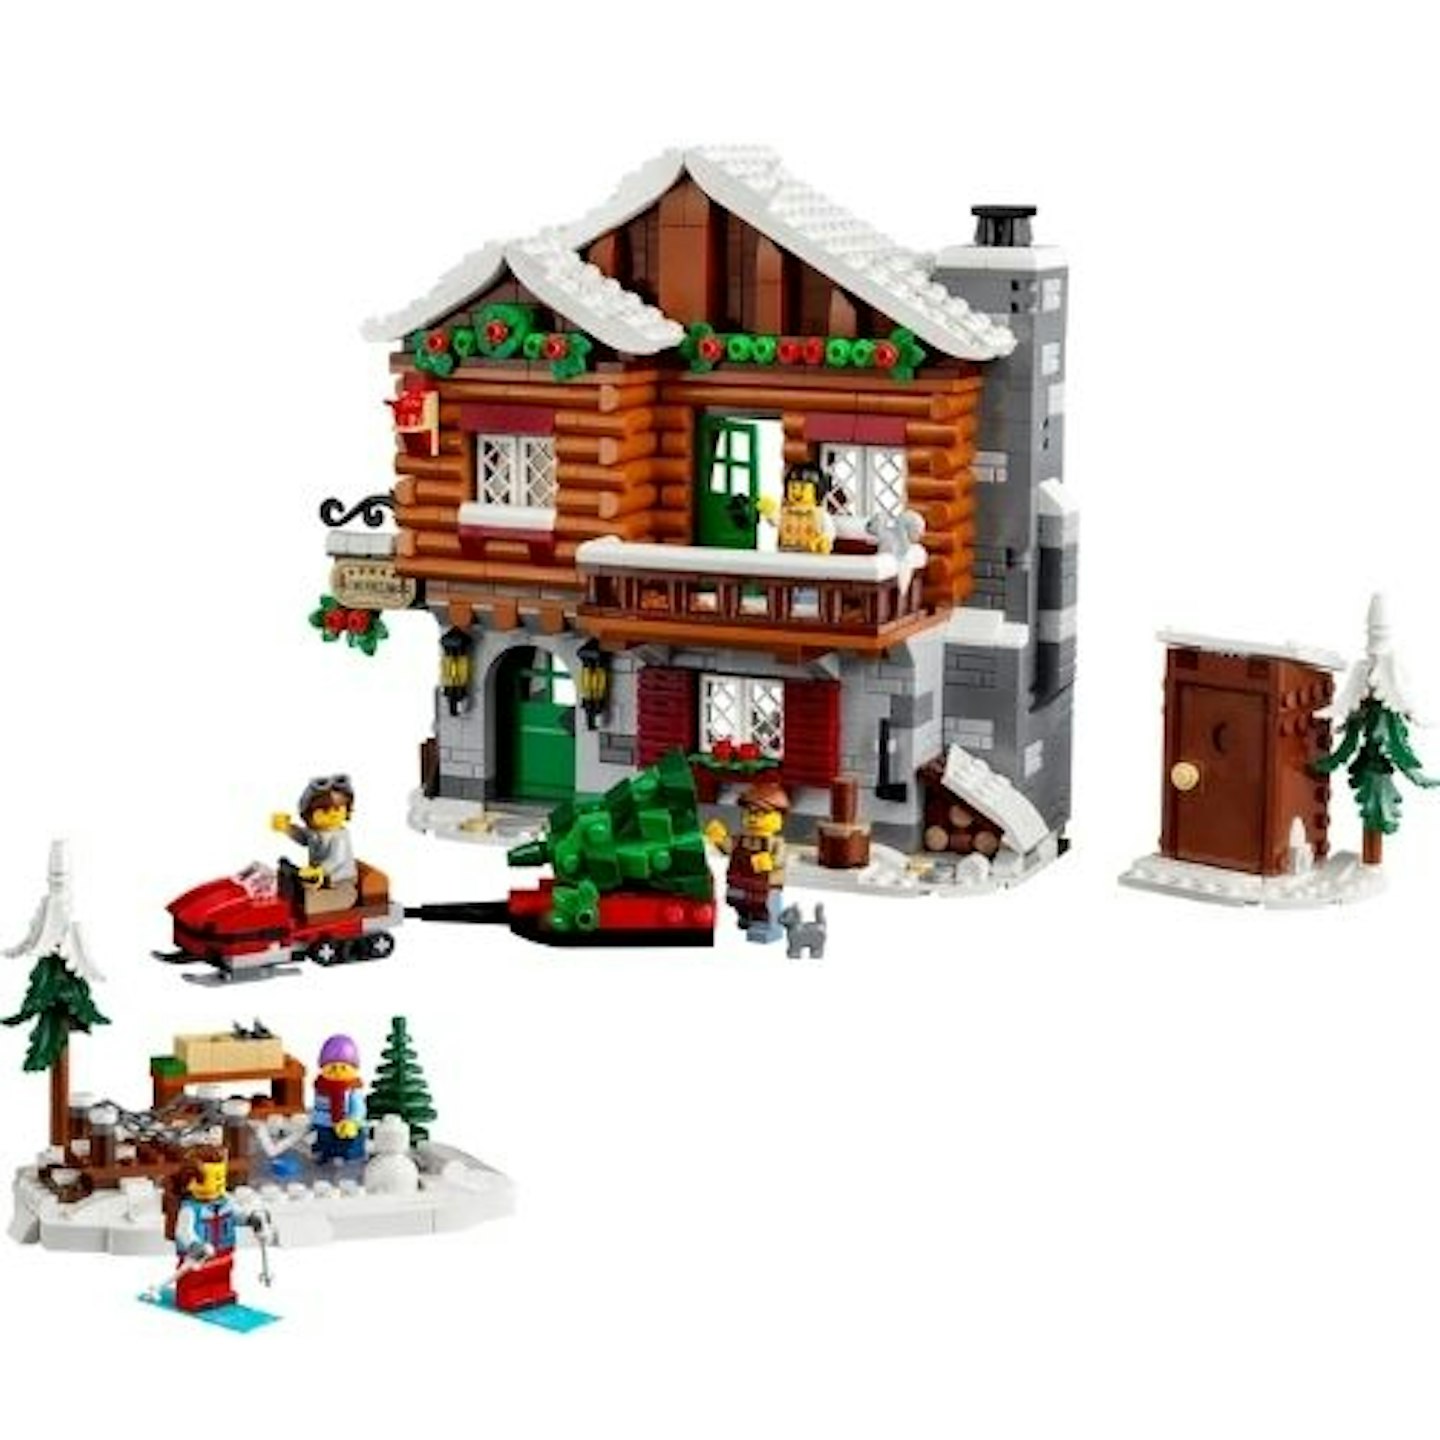 Top Christmas Toys: Alpine Lodge